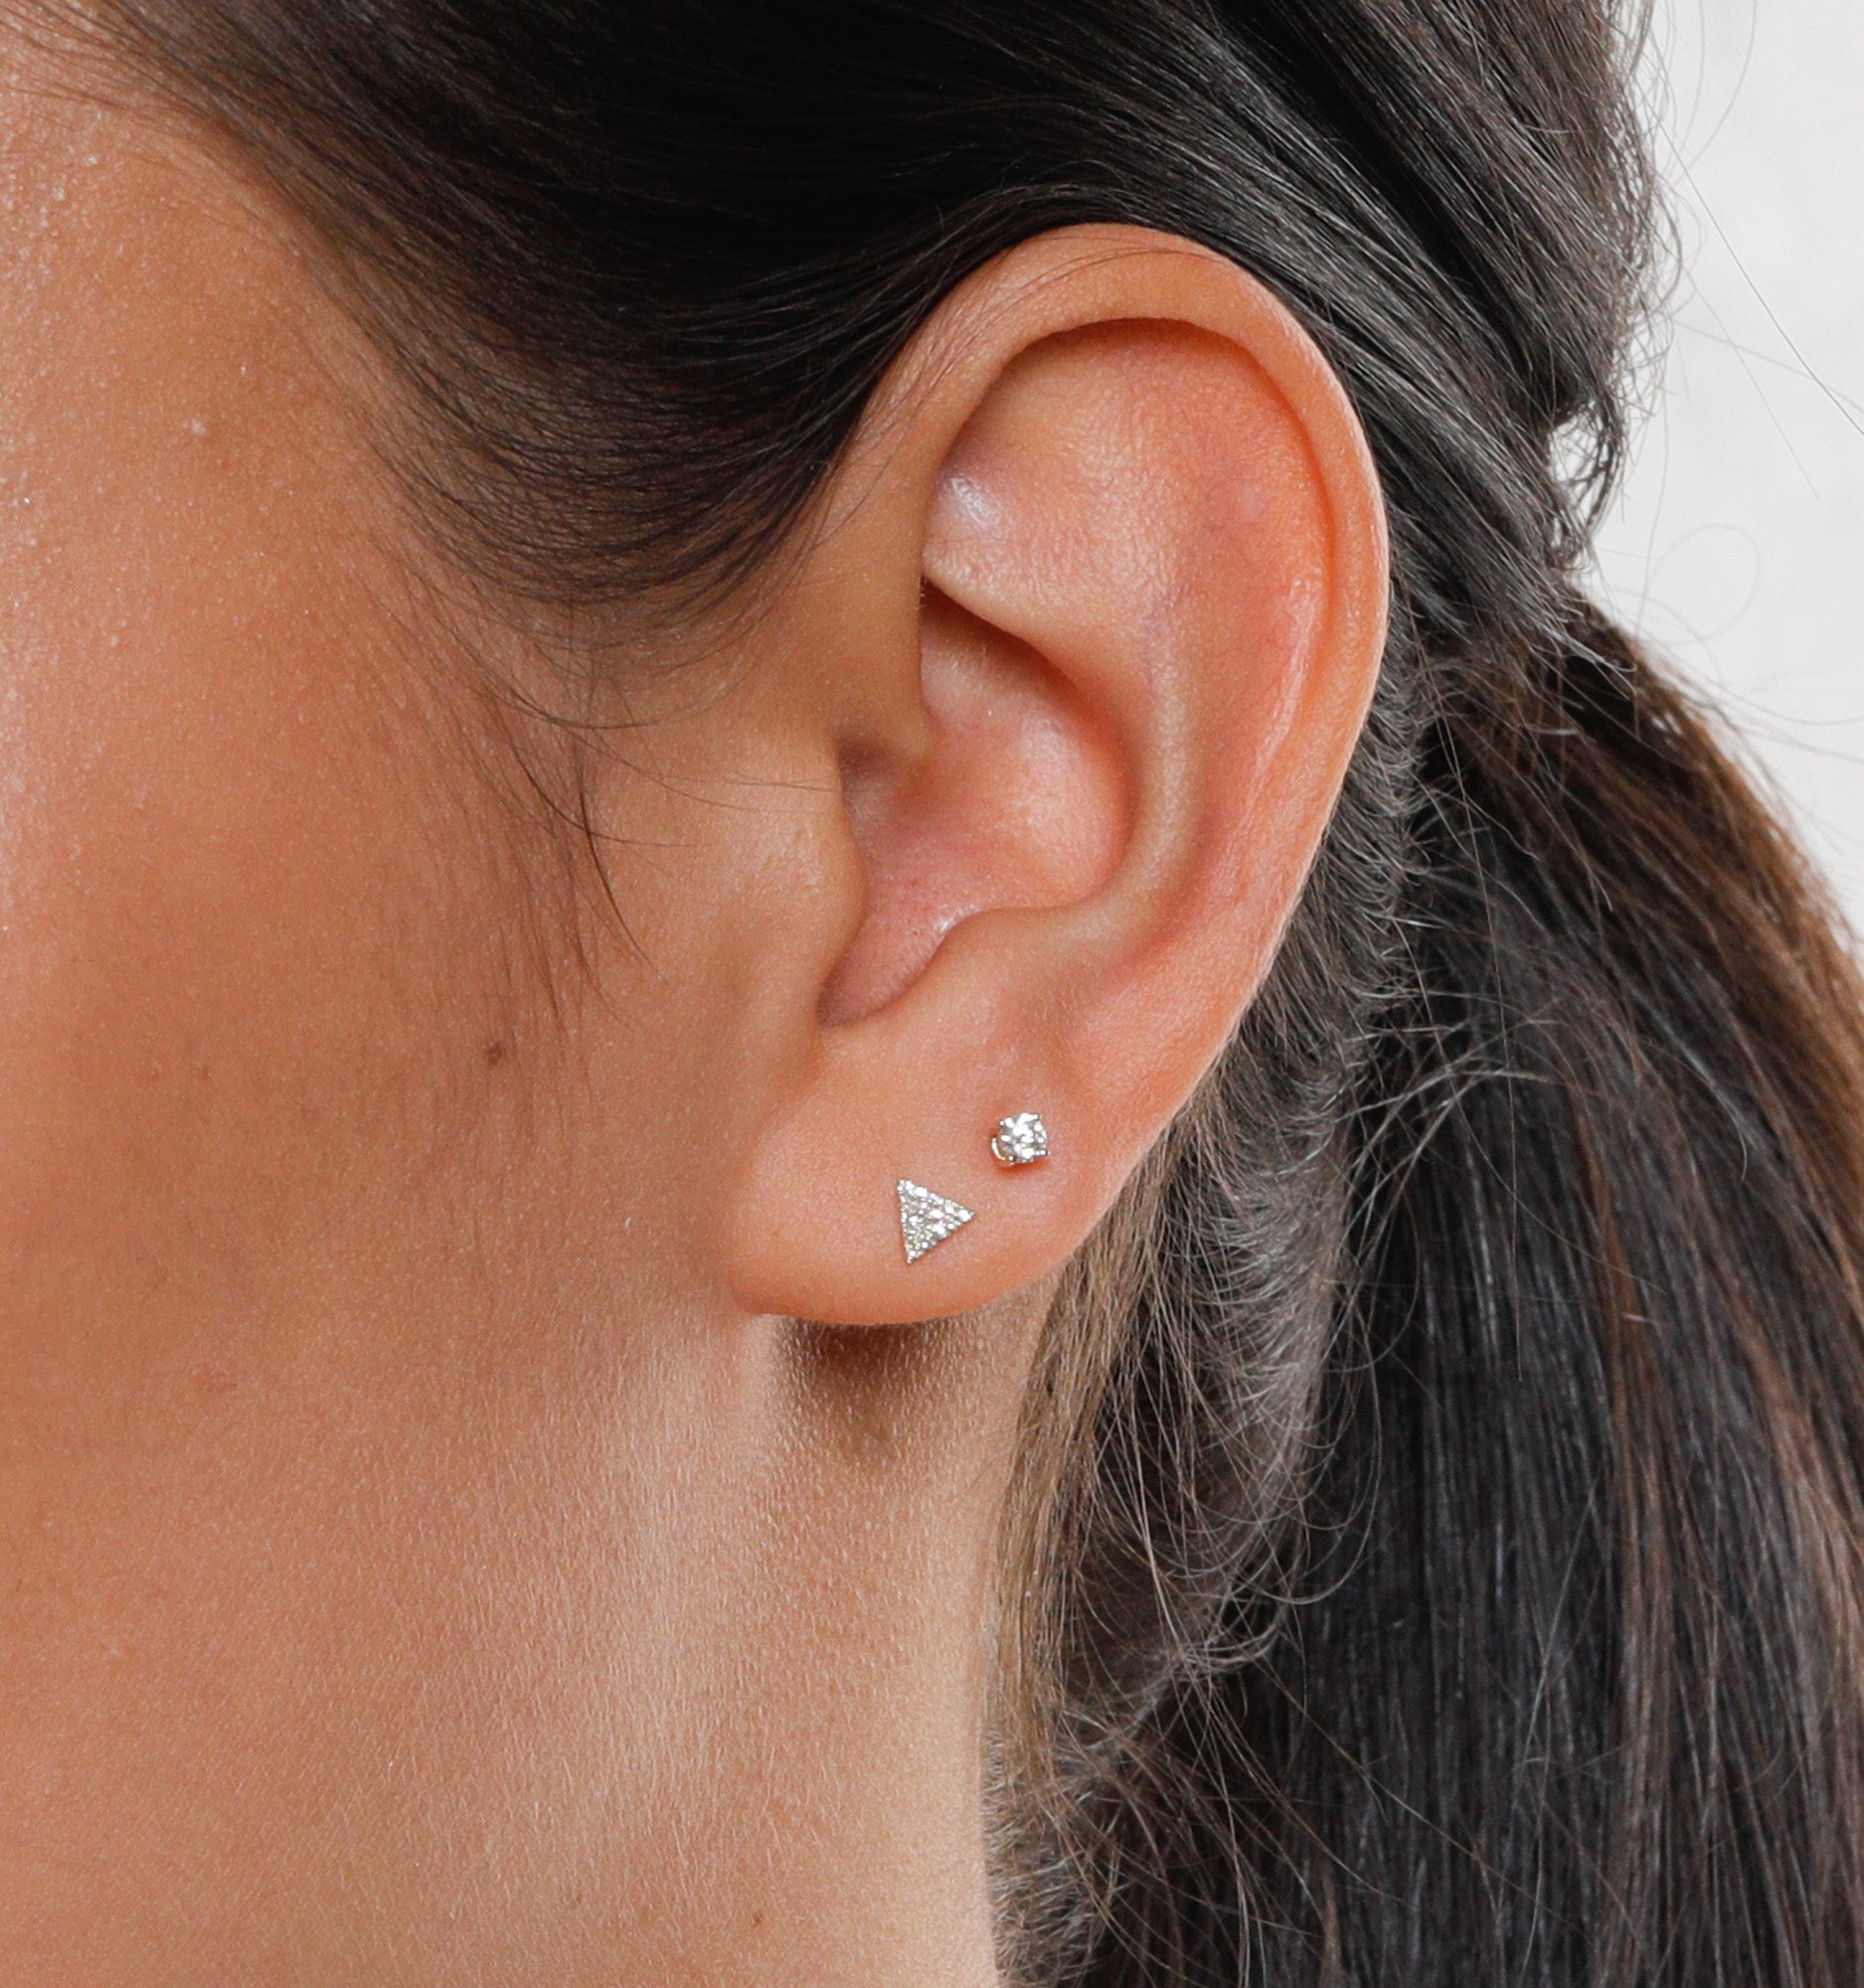 Pave Triangle Diamond Stud Earrings